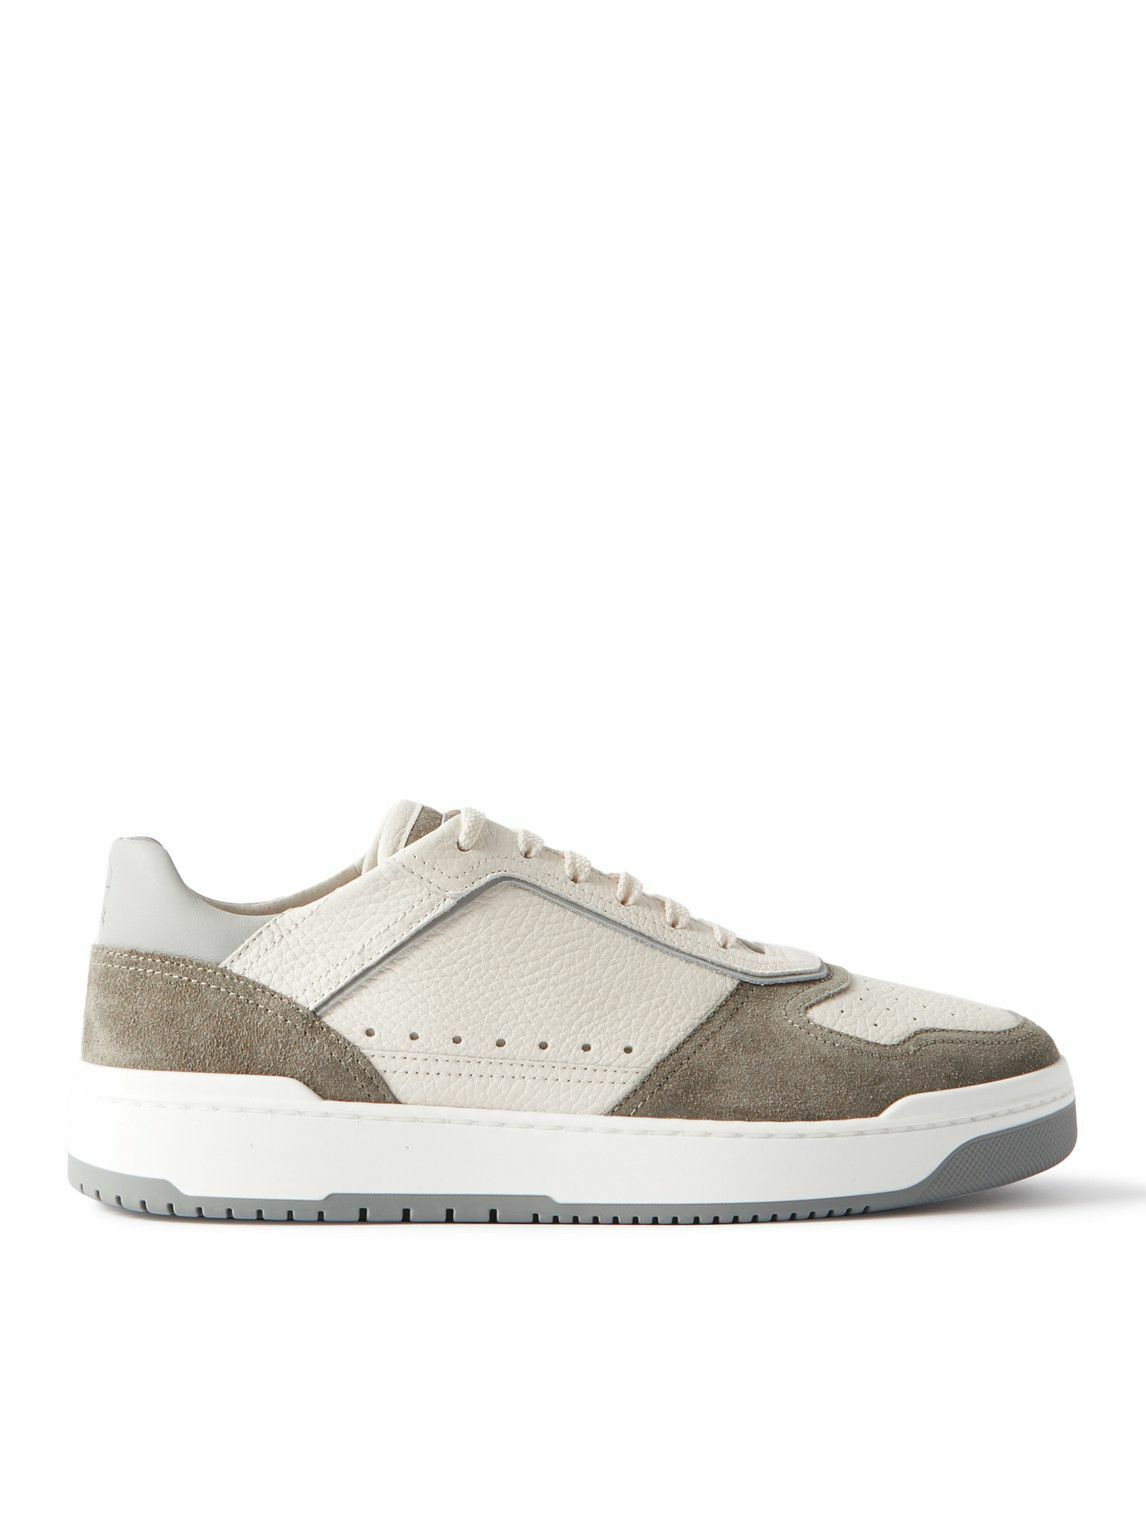 Brunello Cucinelli - Suede-Trimmed Full-Grain Leather Sneakers - White ...